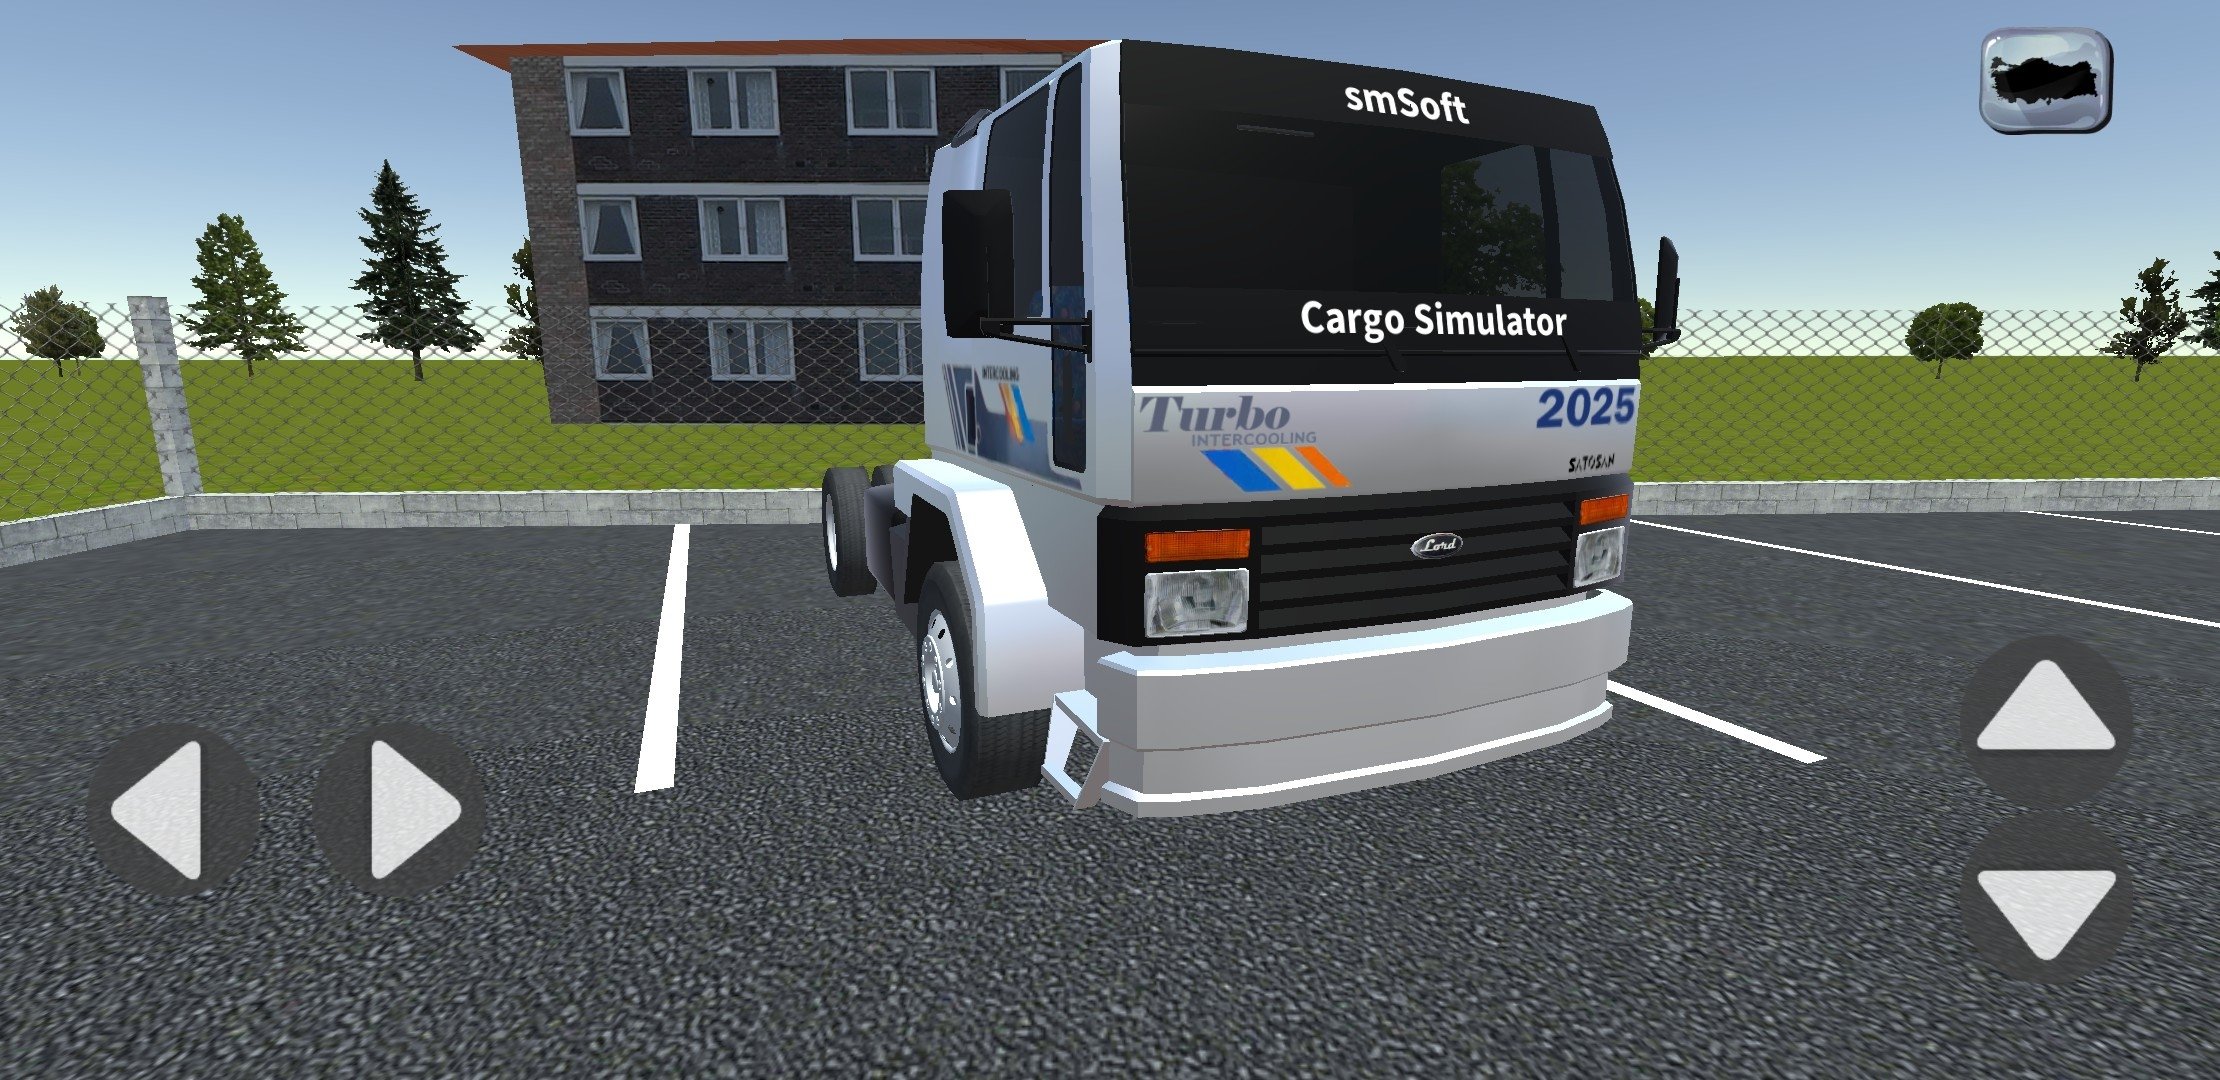 instal the new for windows Cargo Simulator 2023